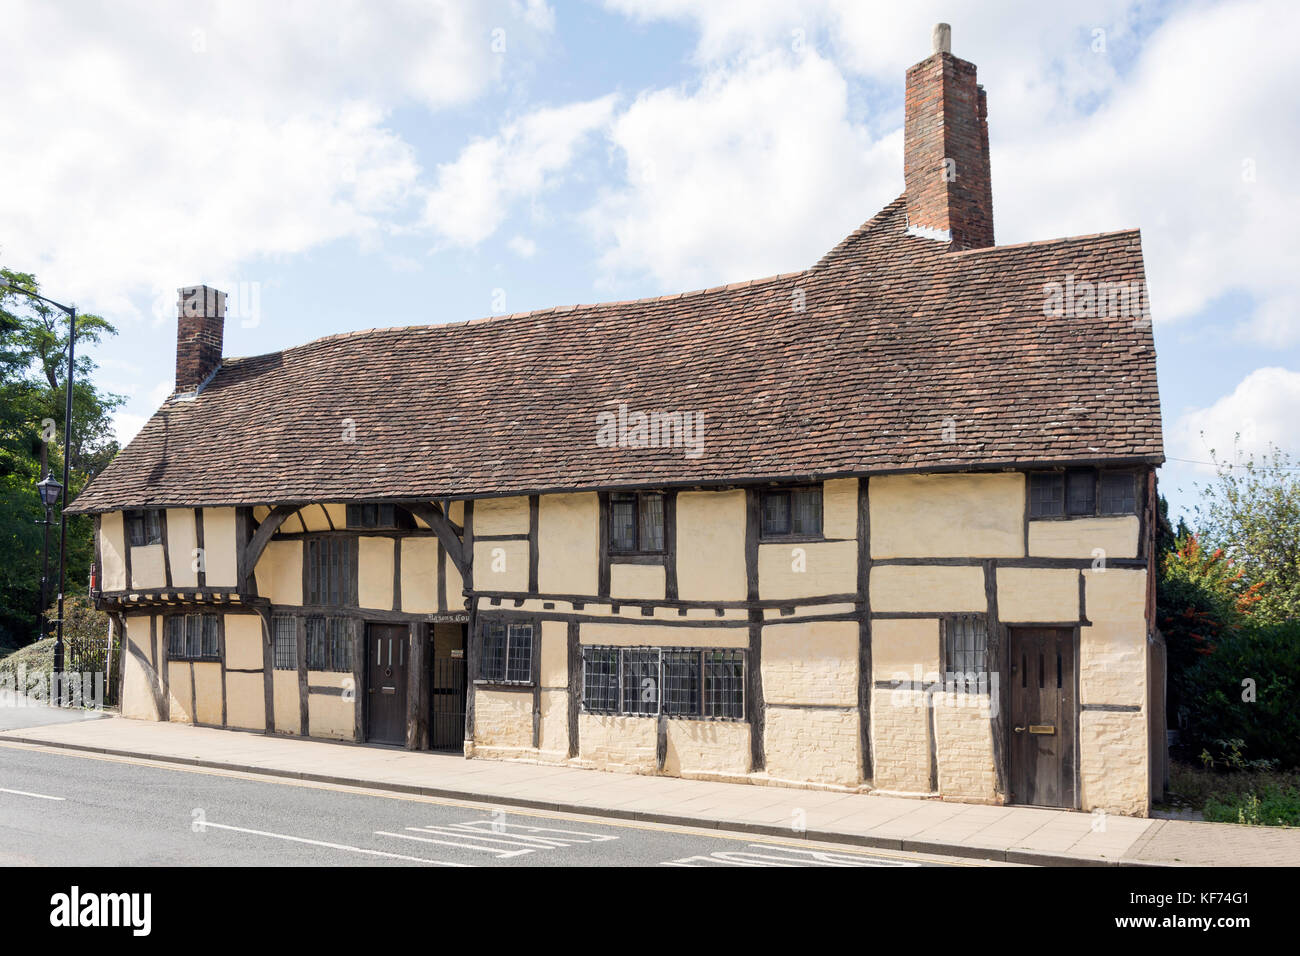 Xv secolo muratori' Court town house, Rother Street, Stratford-upon-Avon, Warwickshire, Inghilterra, Regno Unito Foto Stock